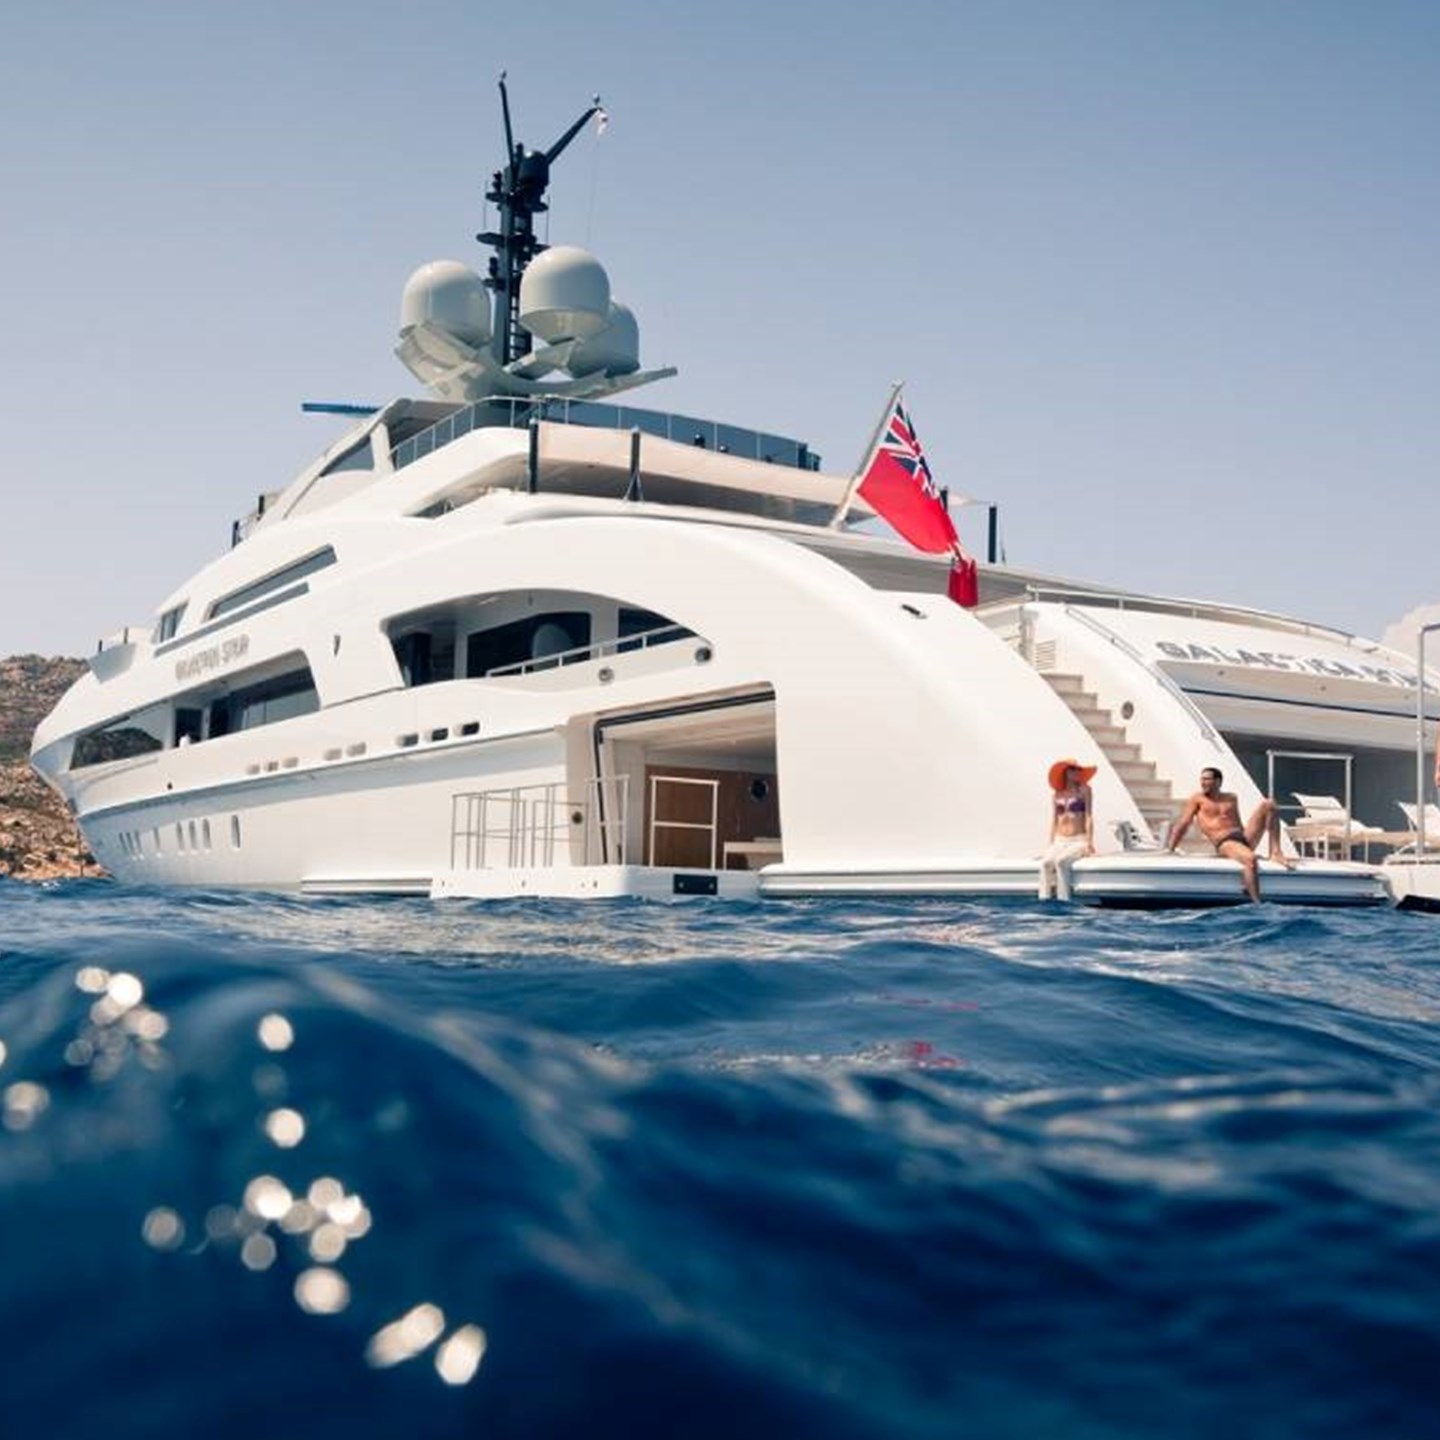 Luxury Motor Yacht Charter sailing in the Mediterranian sun